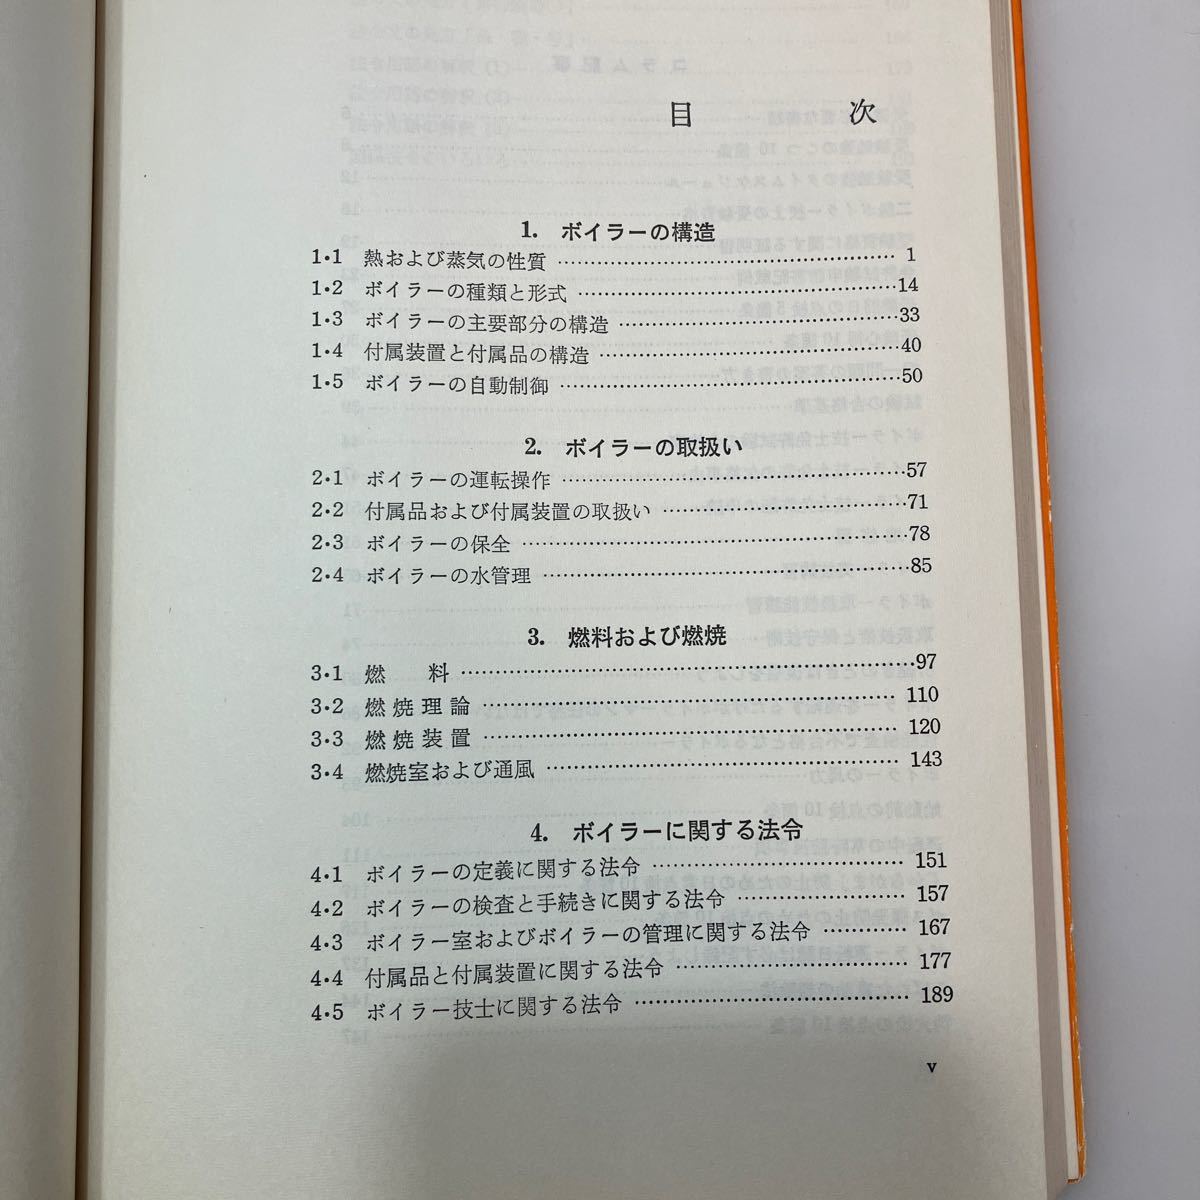 zaa548♪新編二級ボイラー技士試験問題解答400題(第2版)　オーム社(編) オーム社 (1977/12/30)